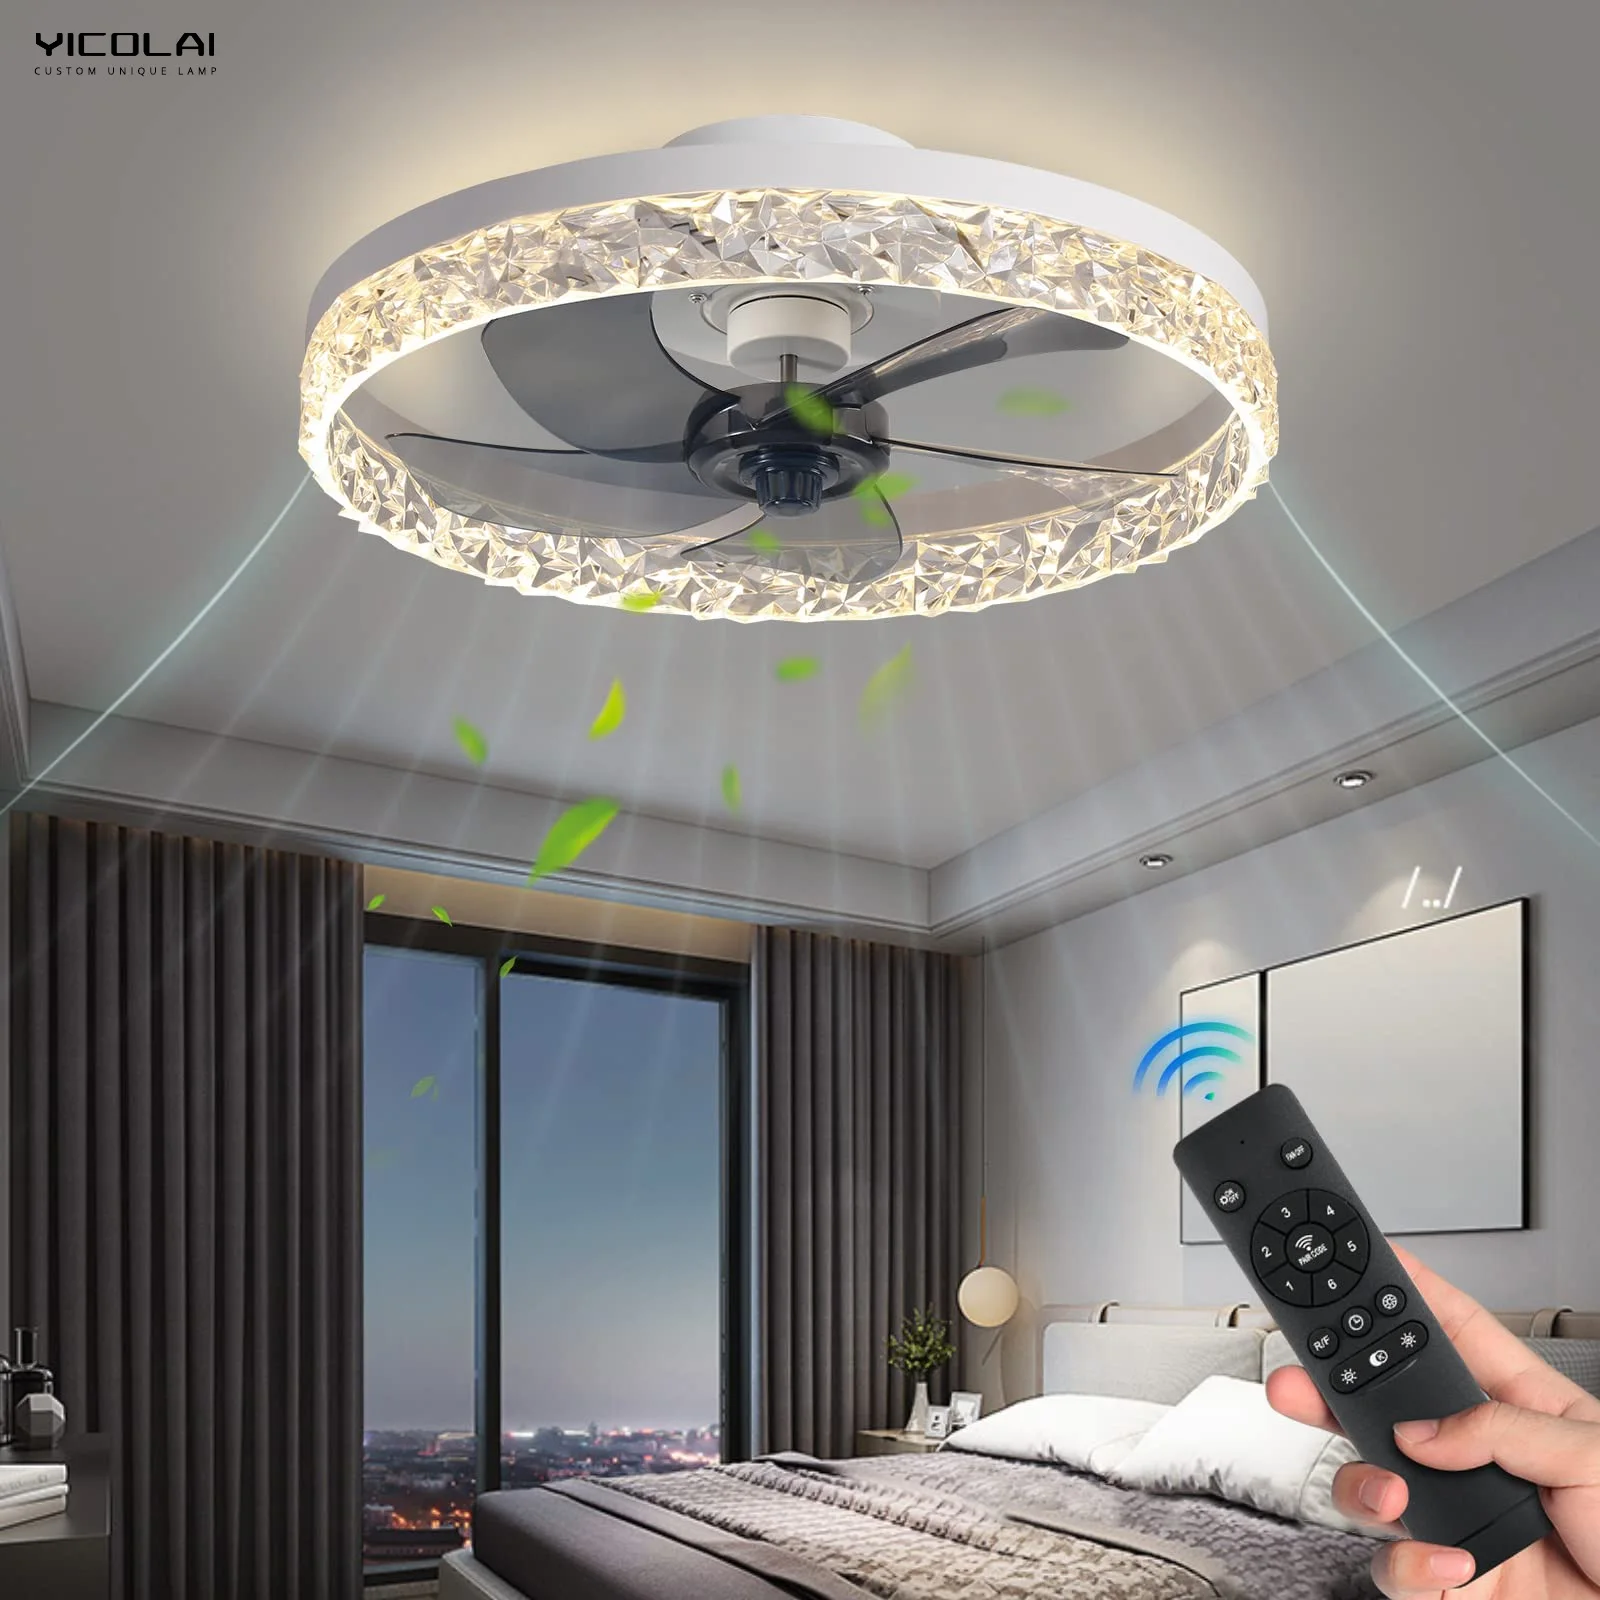 

Nordic Modern Ceiling Fan LED Light Crystal Glass For Living Dinning Study Room Bedroom Cloakroom Loft Home Decor Luxury Fixture